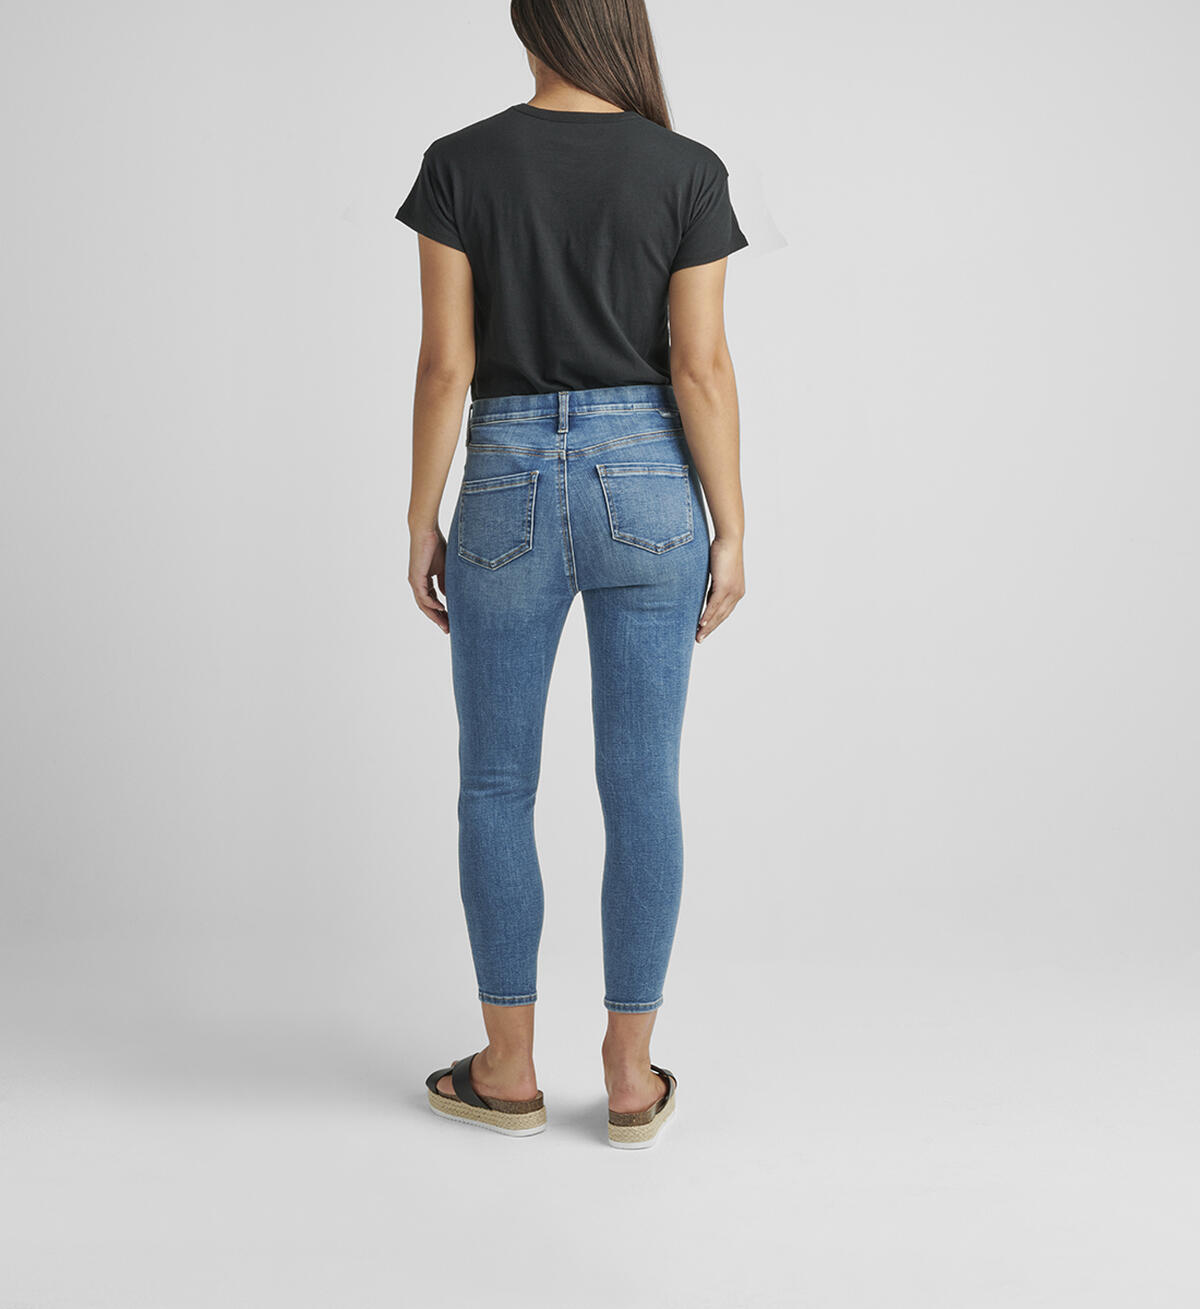 Valentina High Rise Skinny Crop Pull-On Jeans, , hi-res image number 1